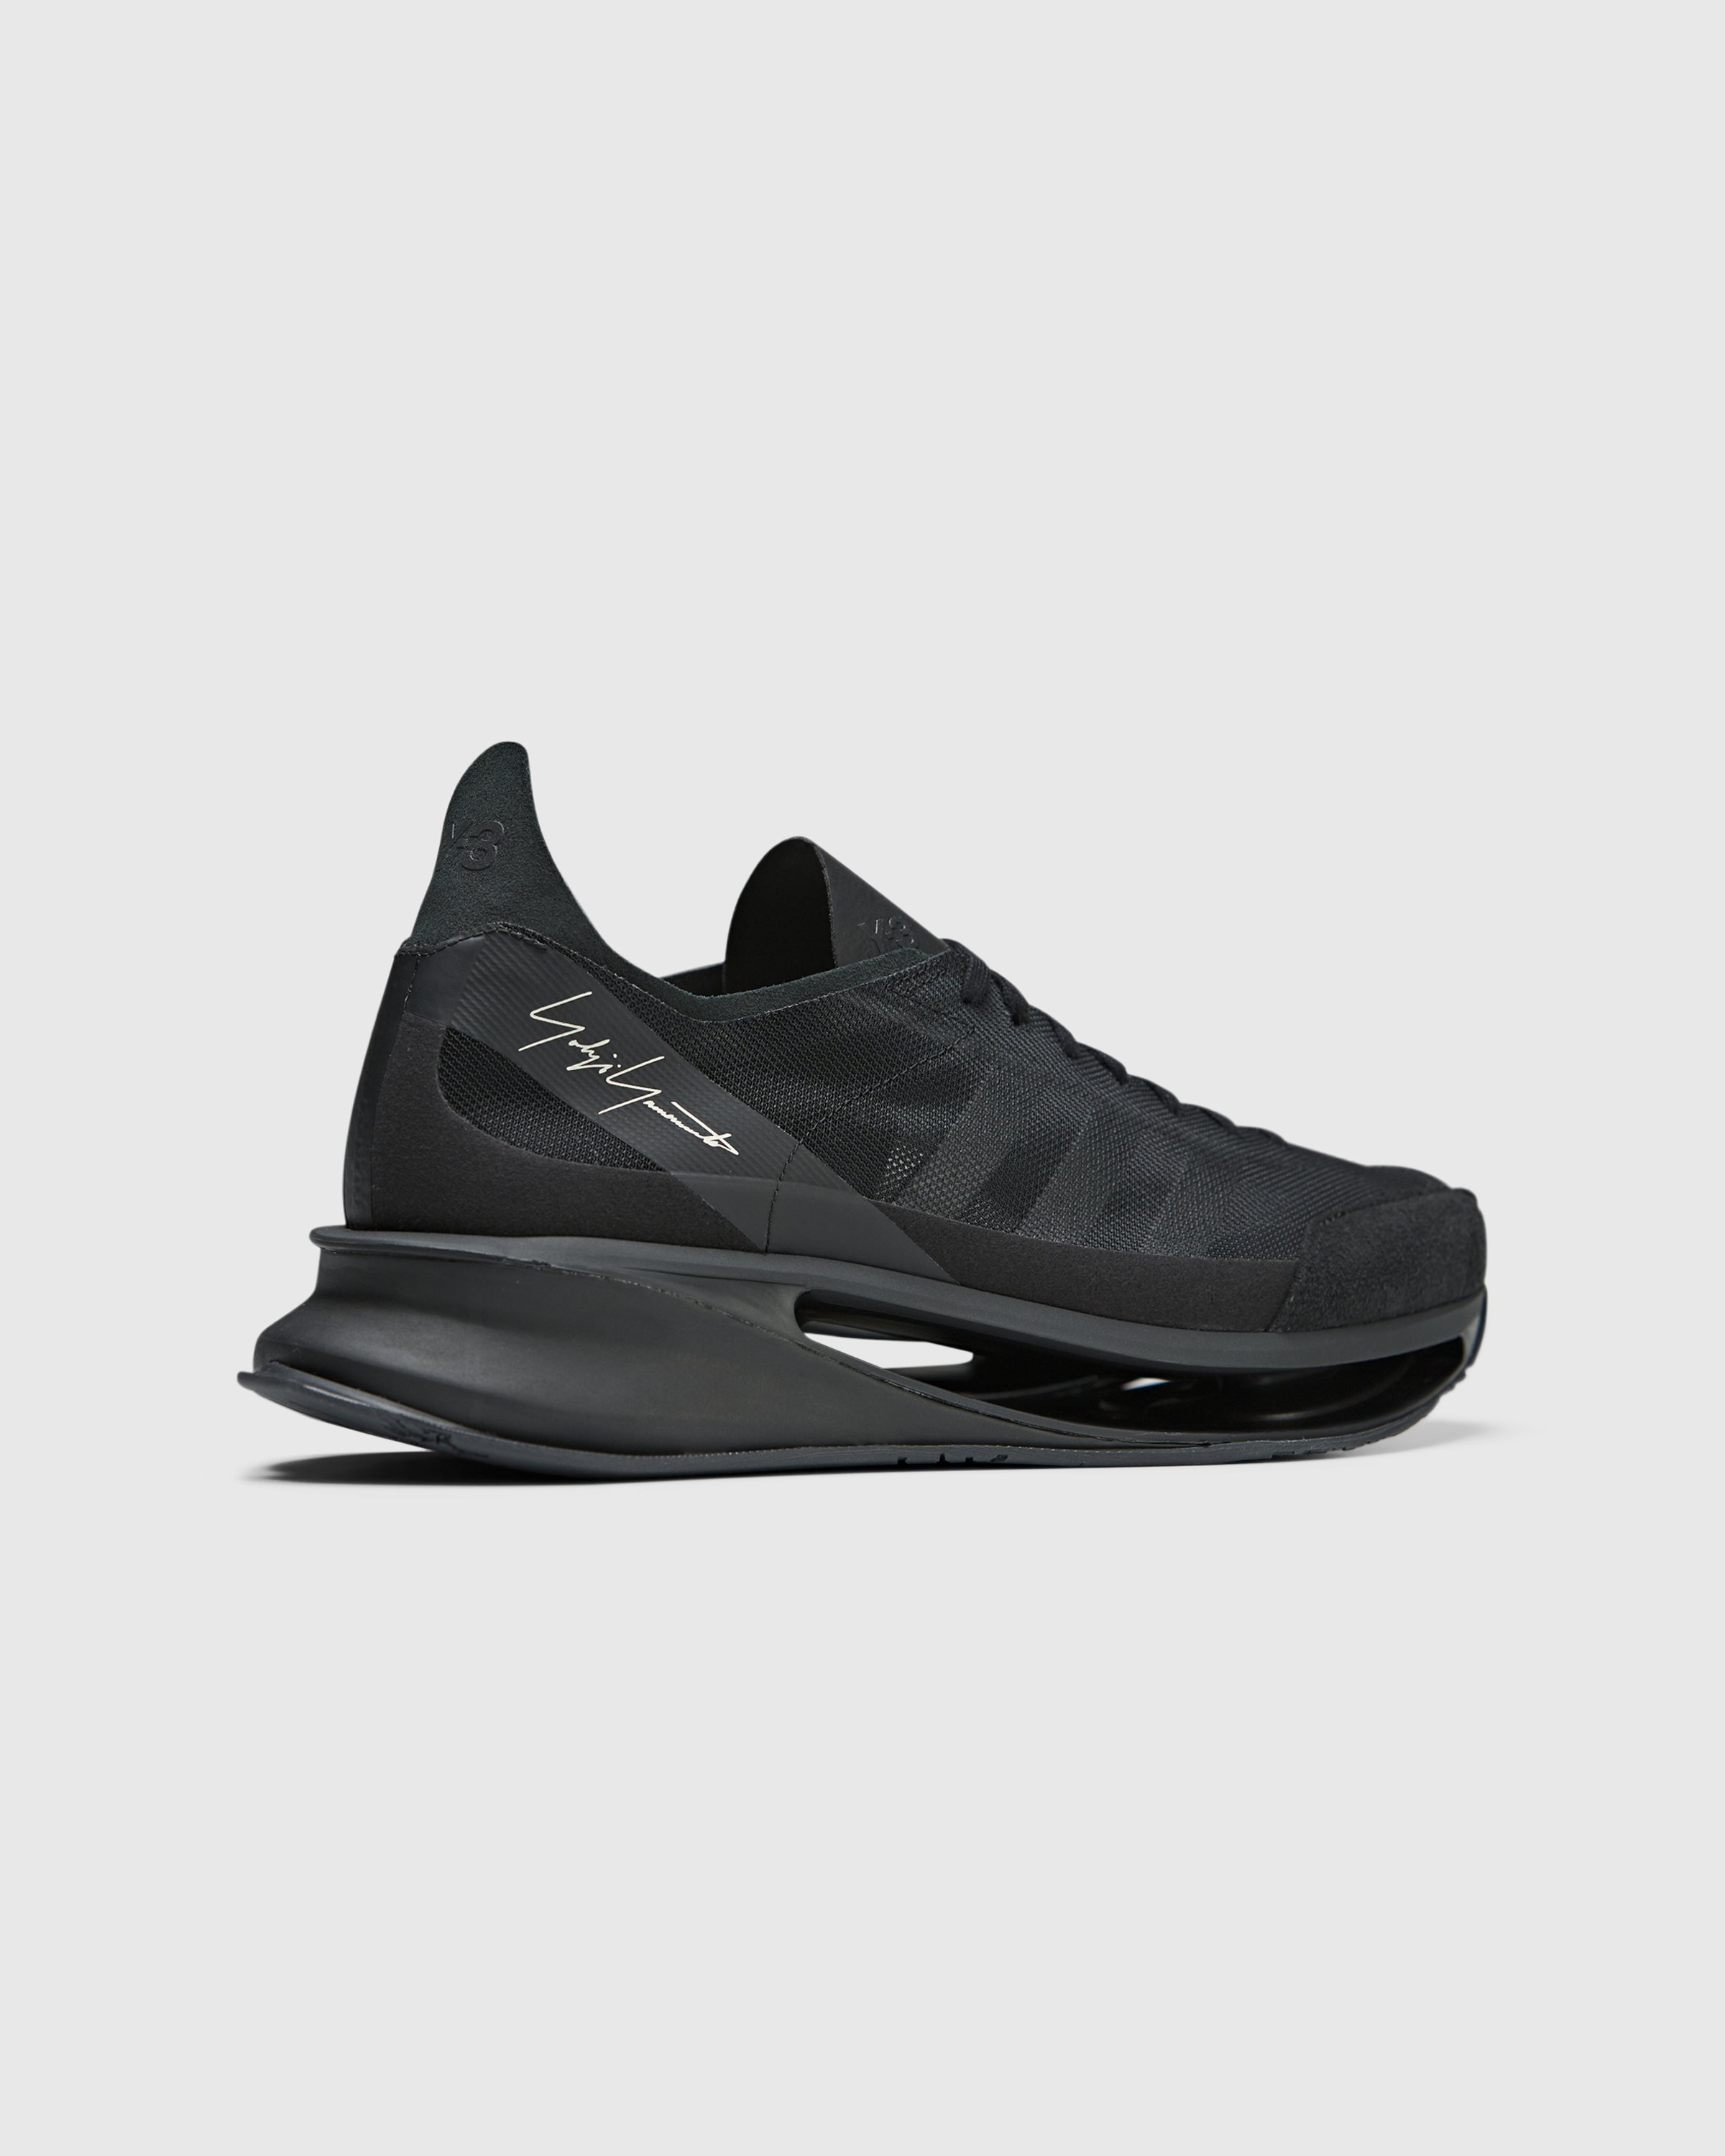 Y-3 - S-Gendo Run Black/Black/Black - Footwear - Black - Image 4